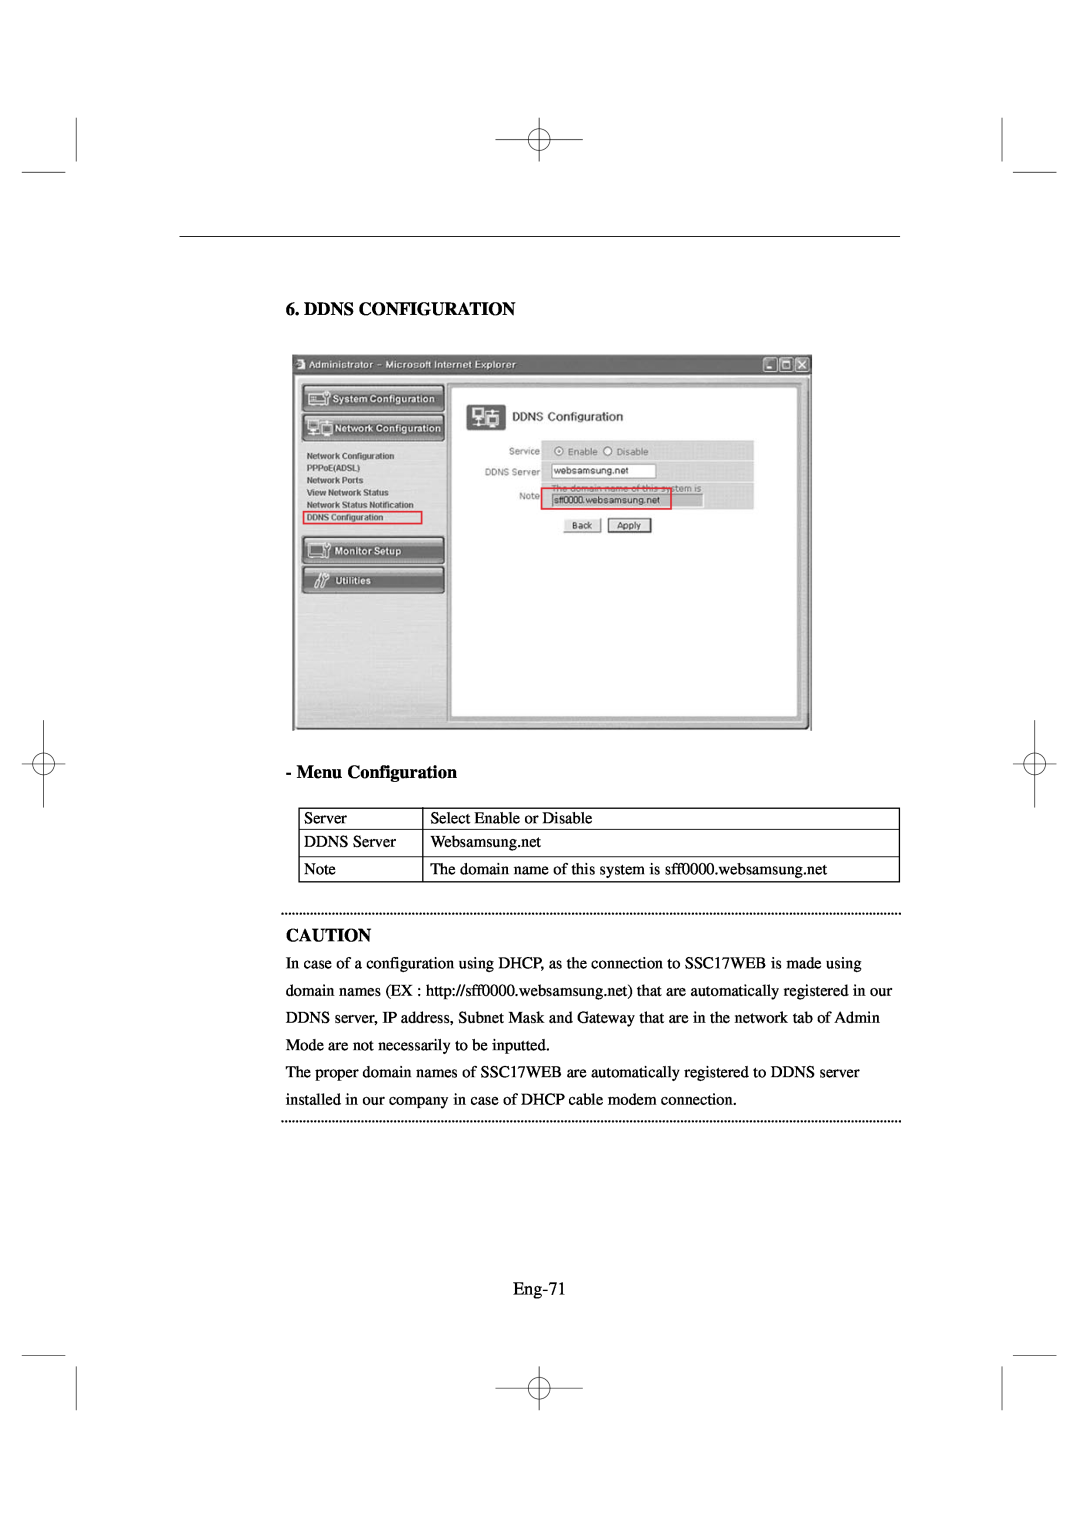 Samsung SSC17WEB manual DDNS CONFIGURATION Menu Configuration, Eng-71 